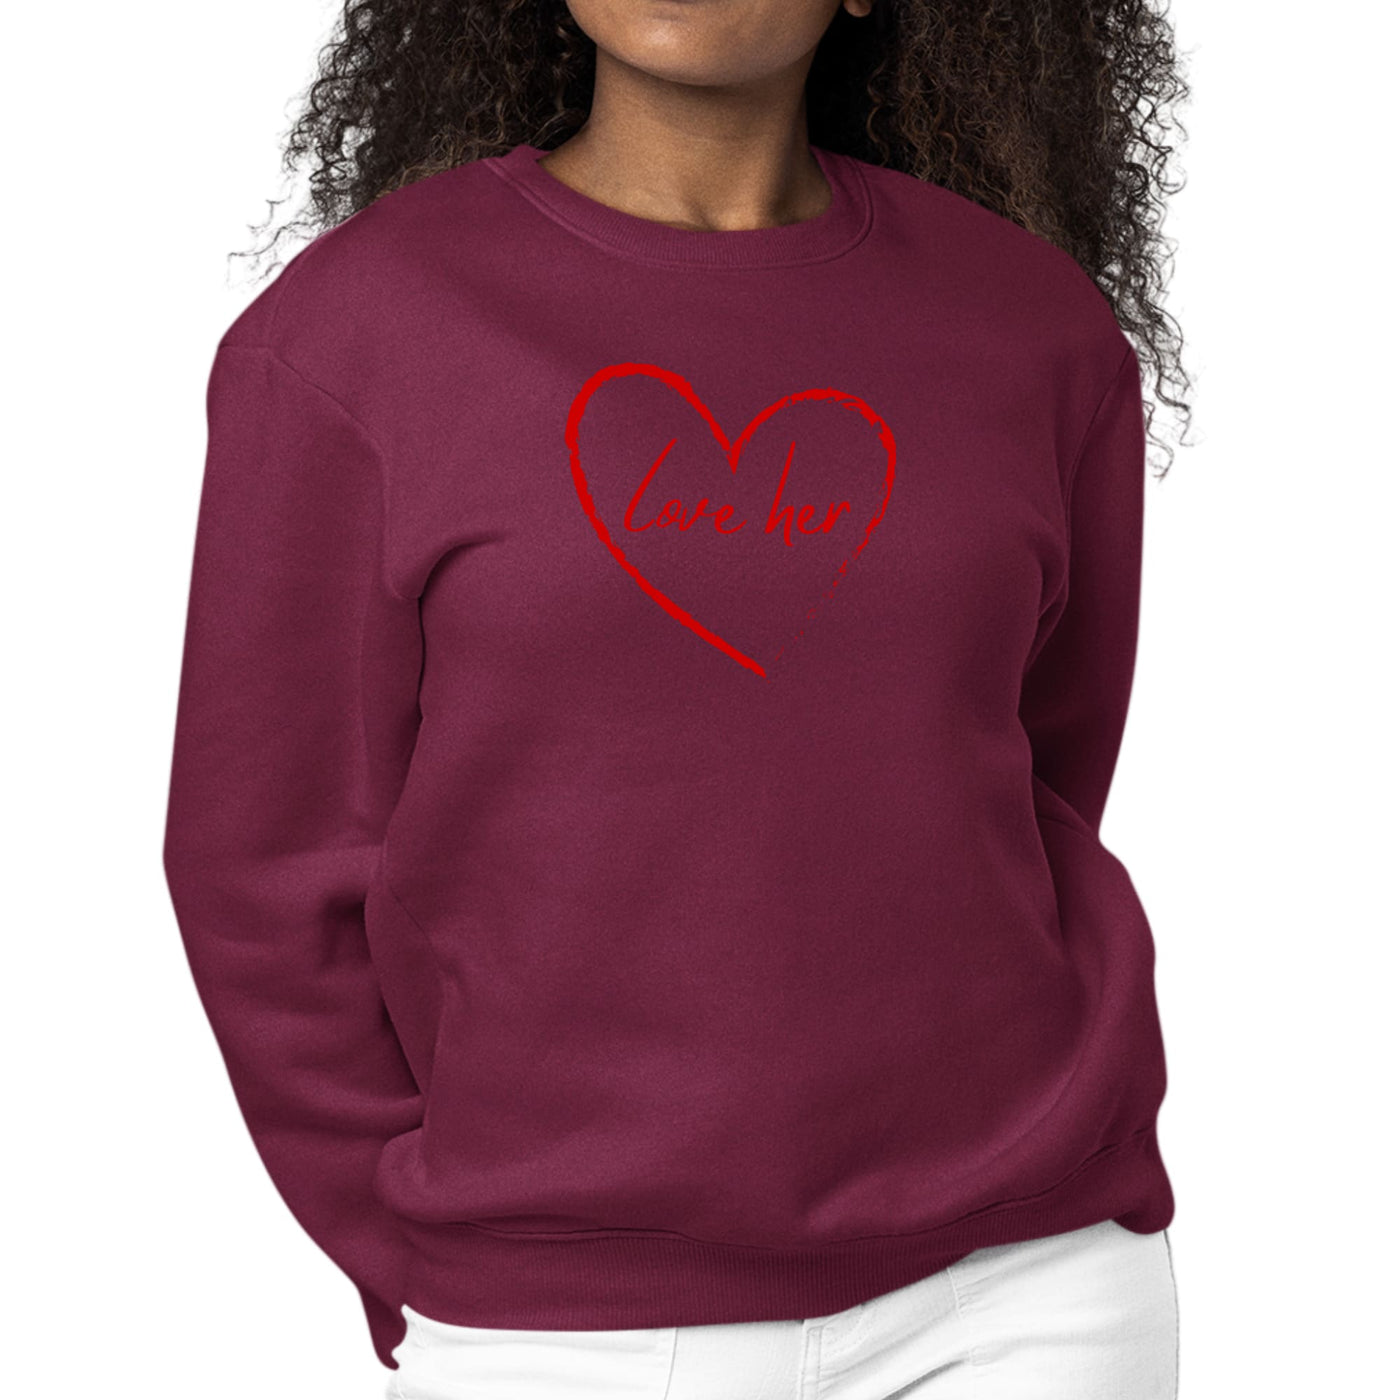 Womens Graphic Sweatshirt Say It Soul Love Her Red - Sweatshirts